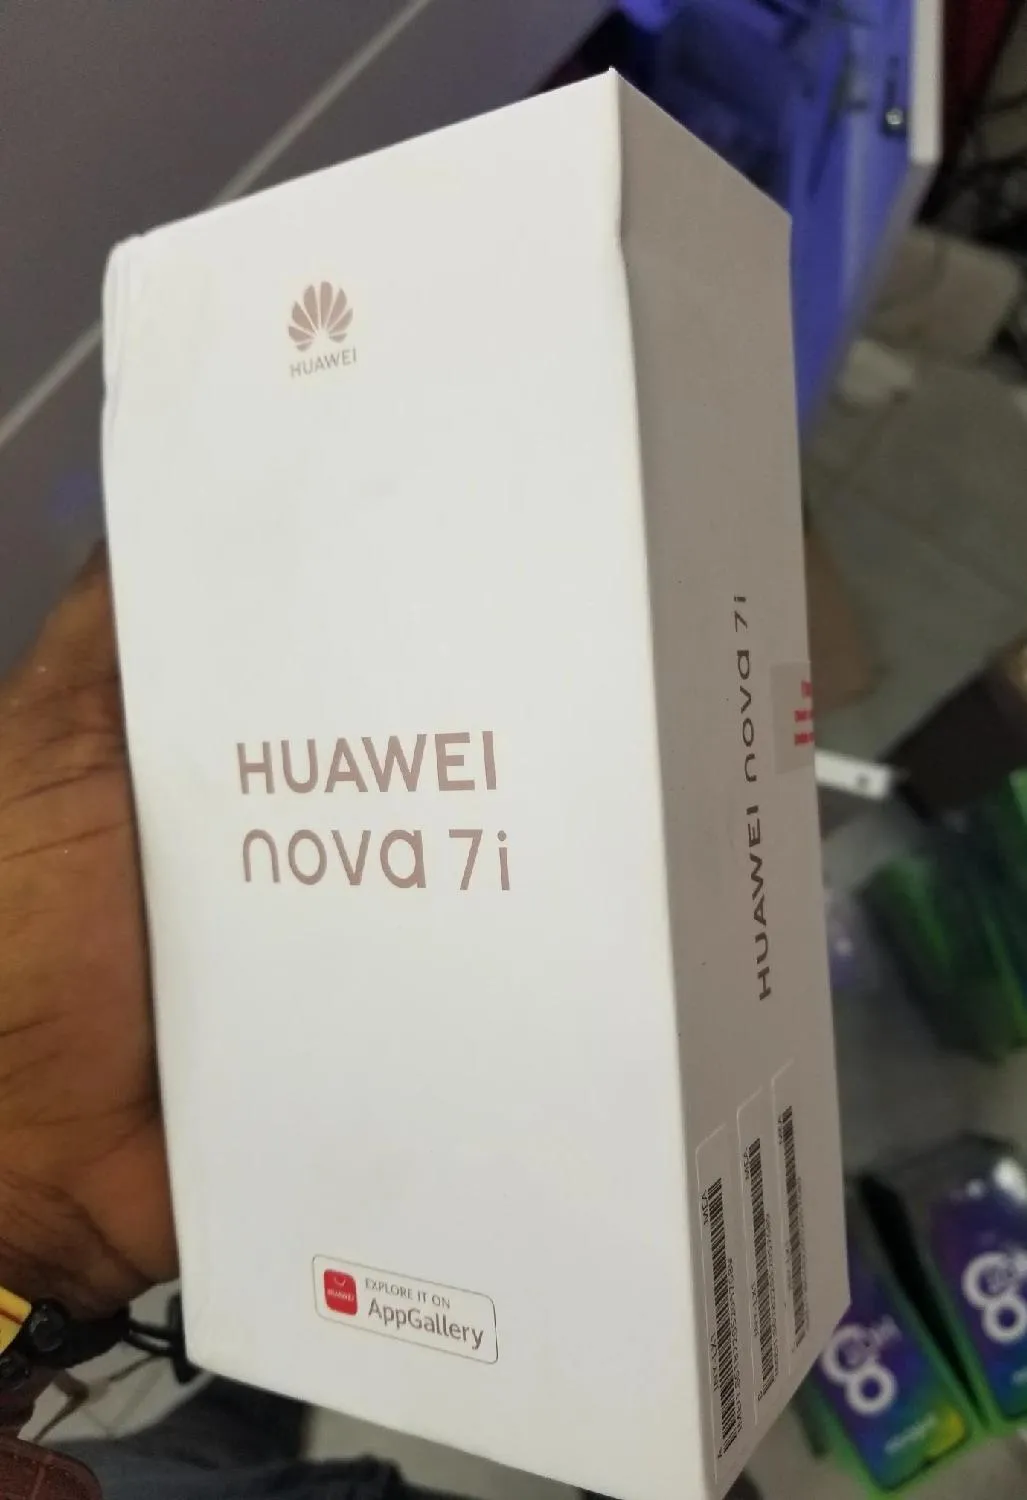 Huawei Nova 7i box packed - photo 1